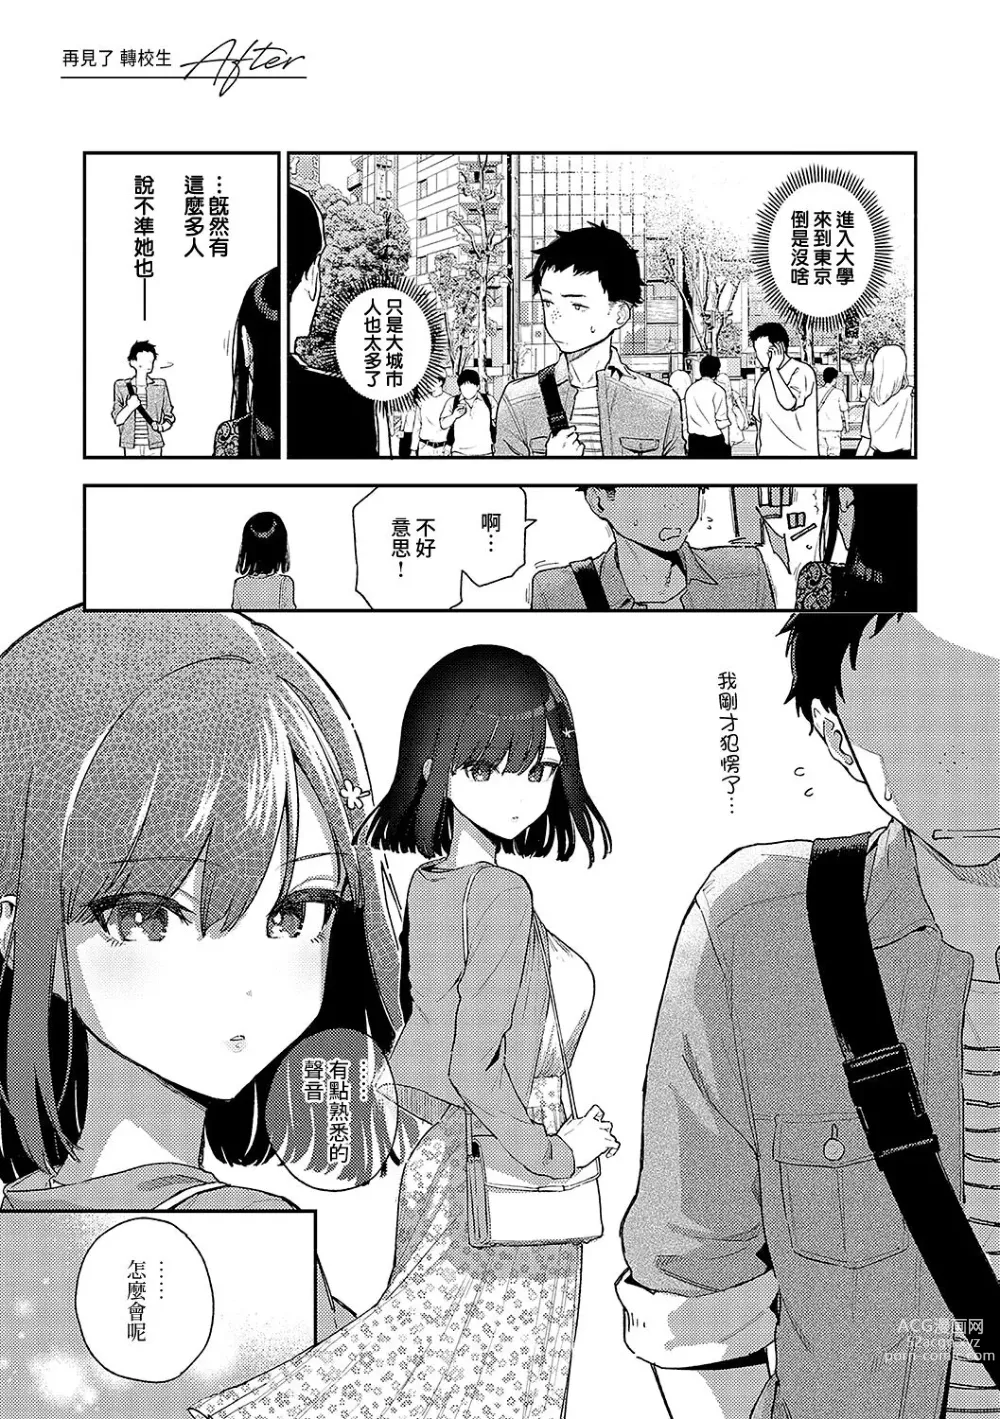 Page 5 of manga Bitter Sweet Complex 作品後記